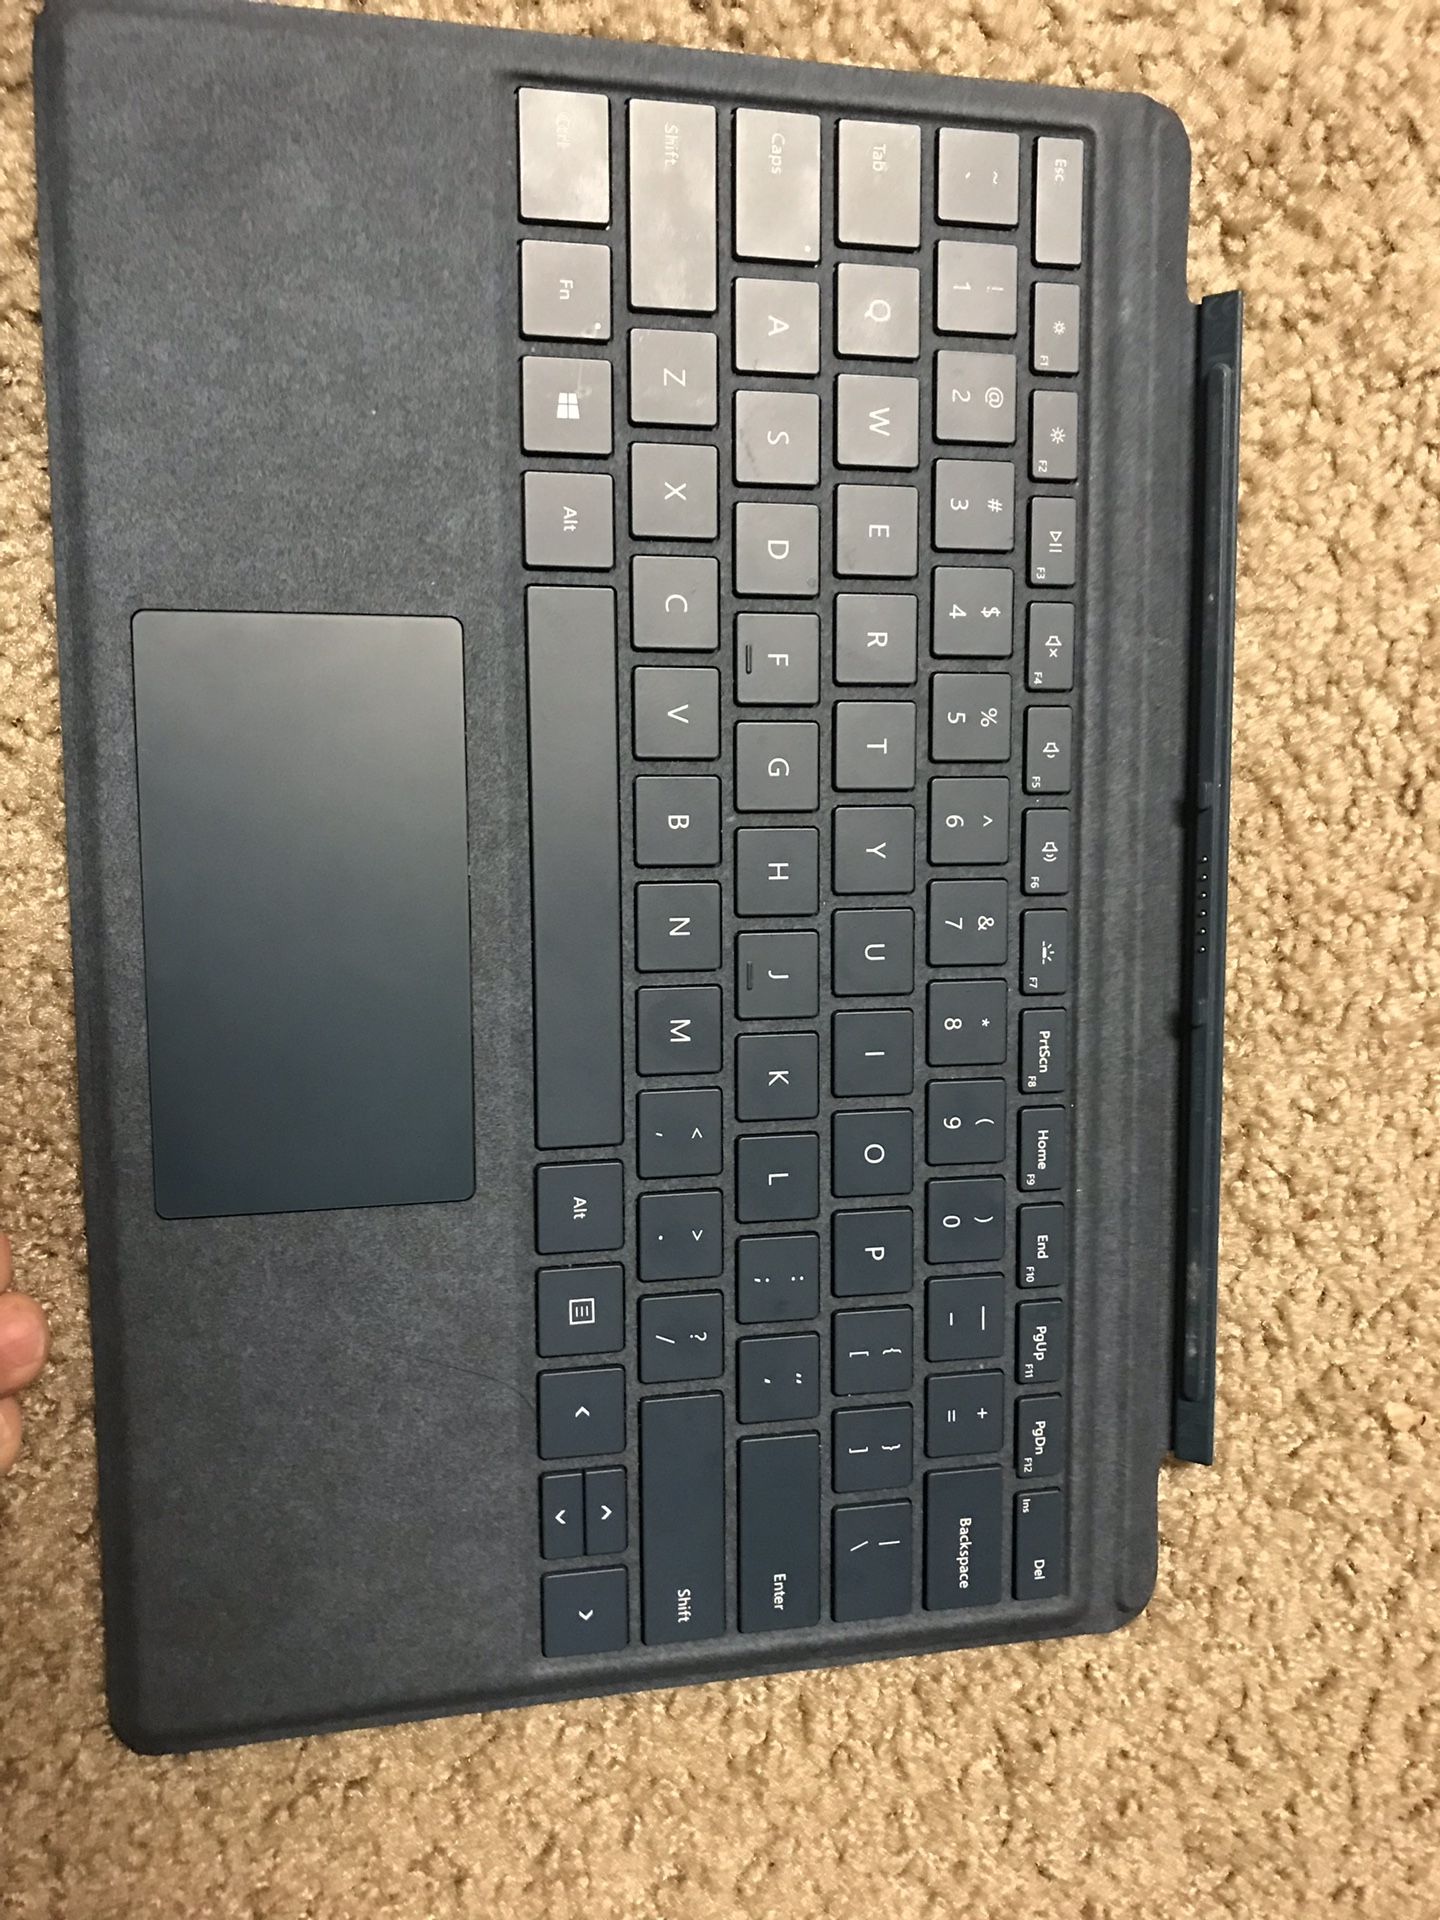 Surface Pro 4 Keyboards